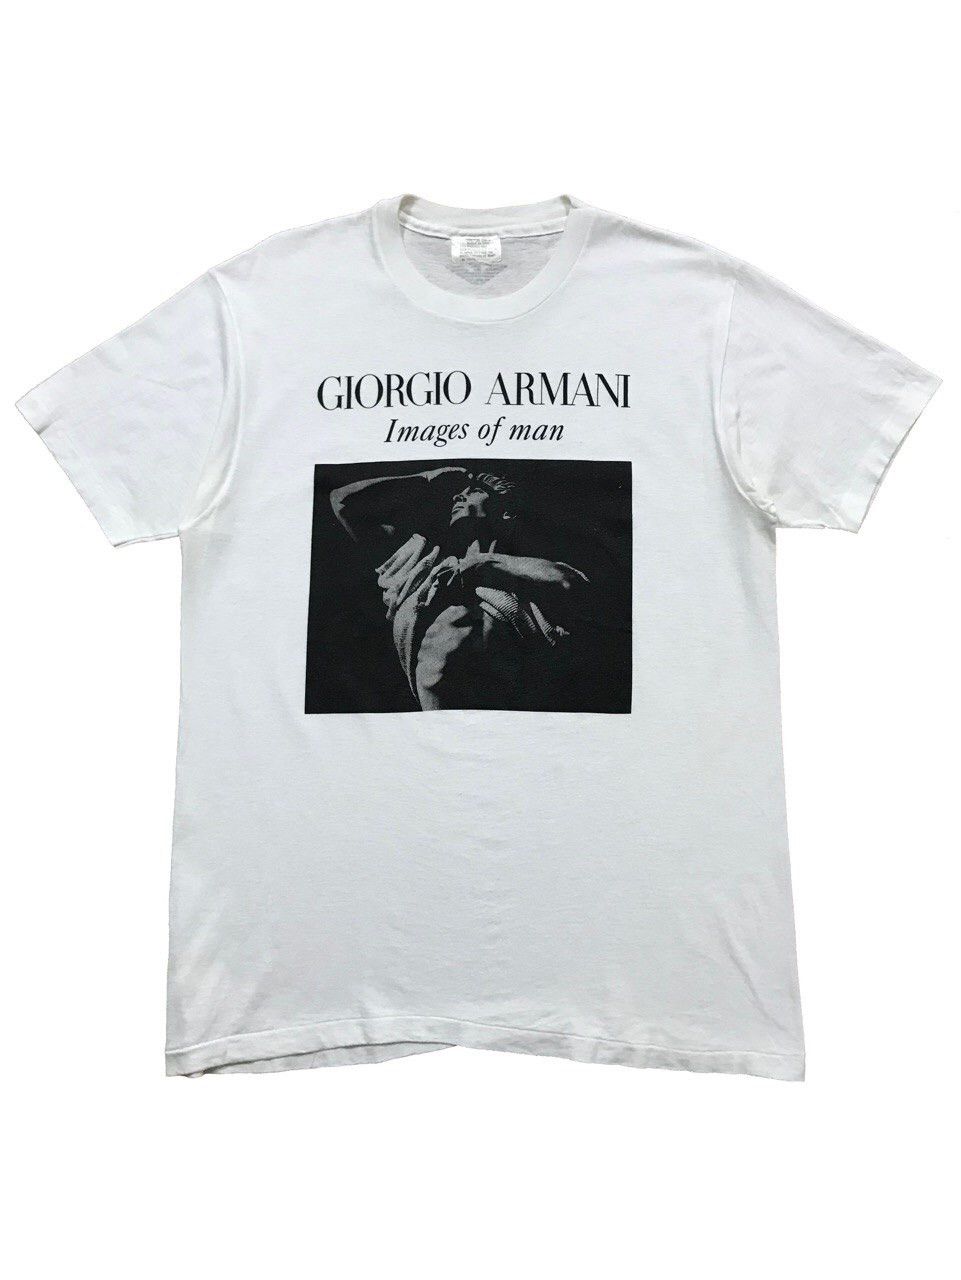 Giorgio Armani Vintage Bruce Weber T-Shirt | Grailed